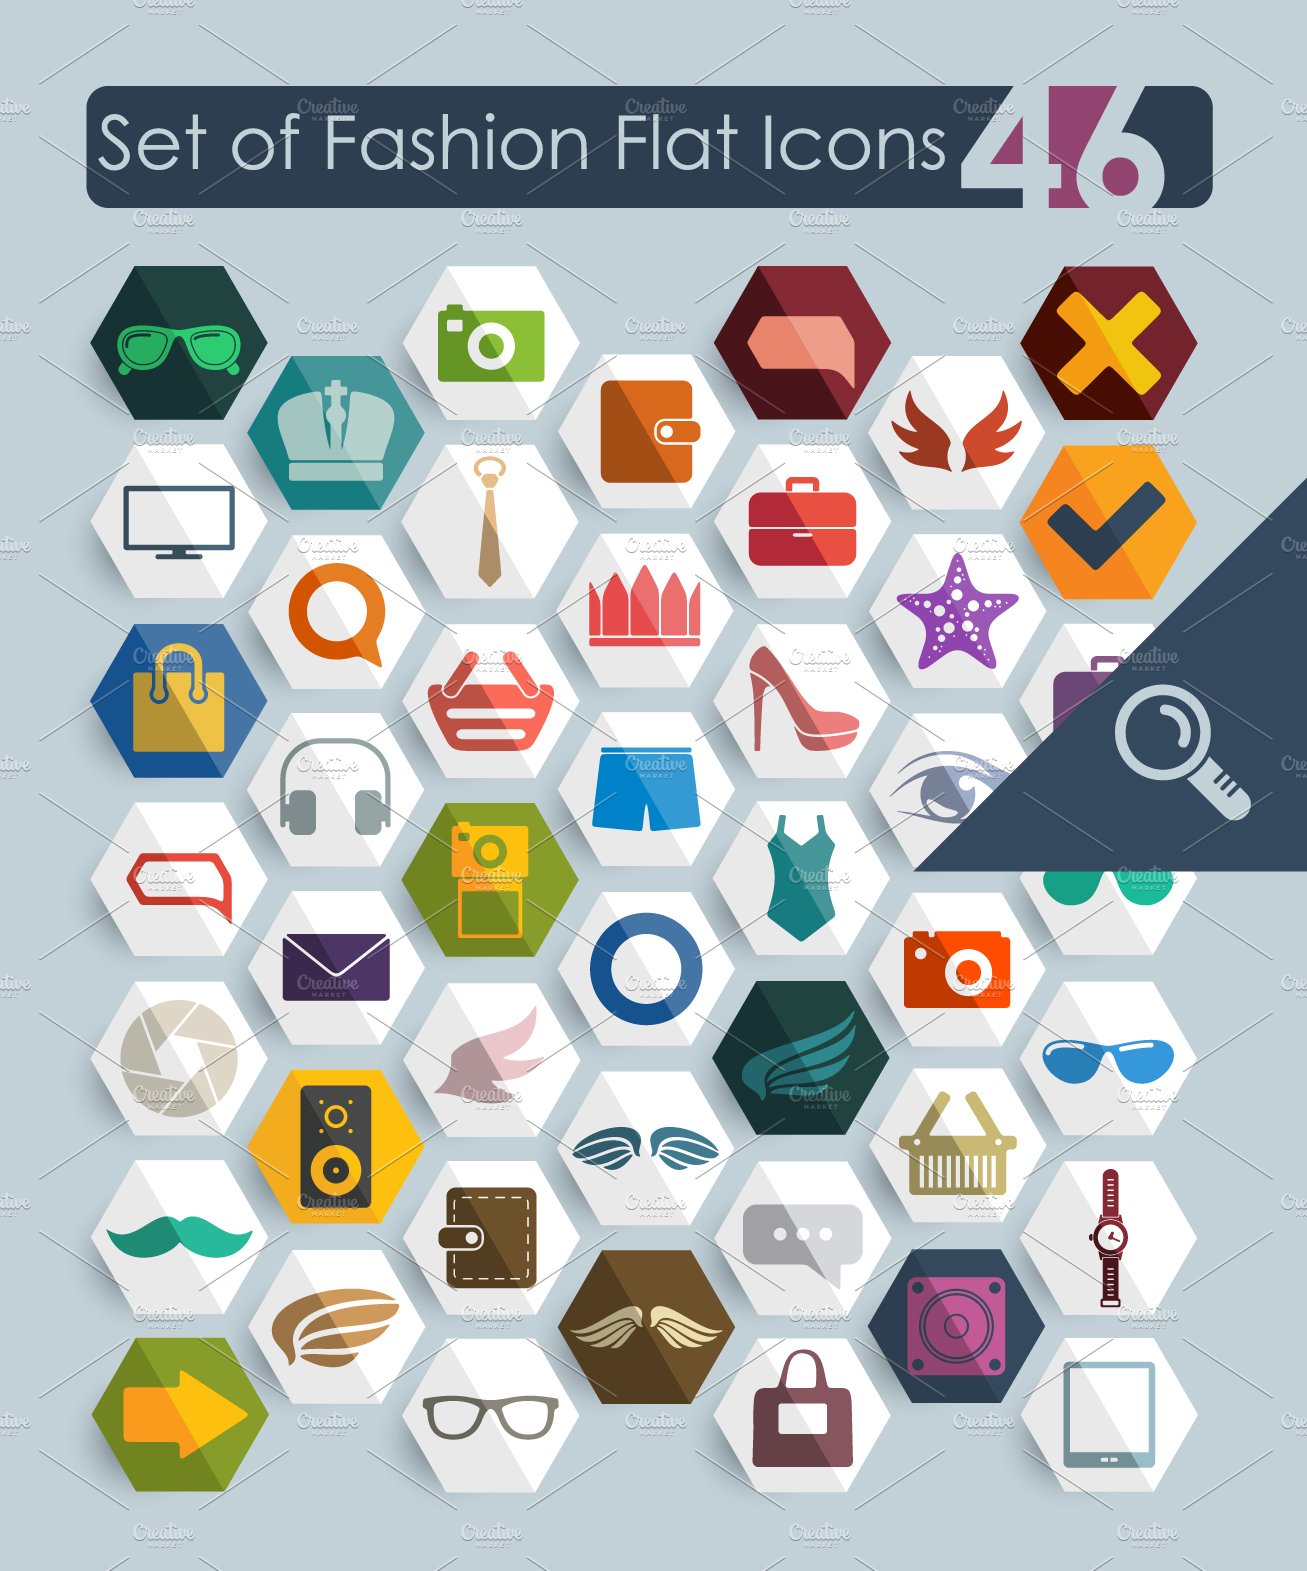 46 FASHION flat icons cover image.